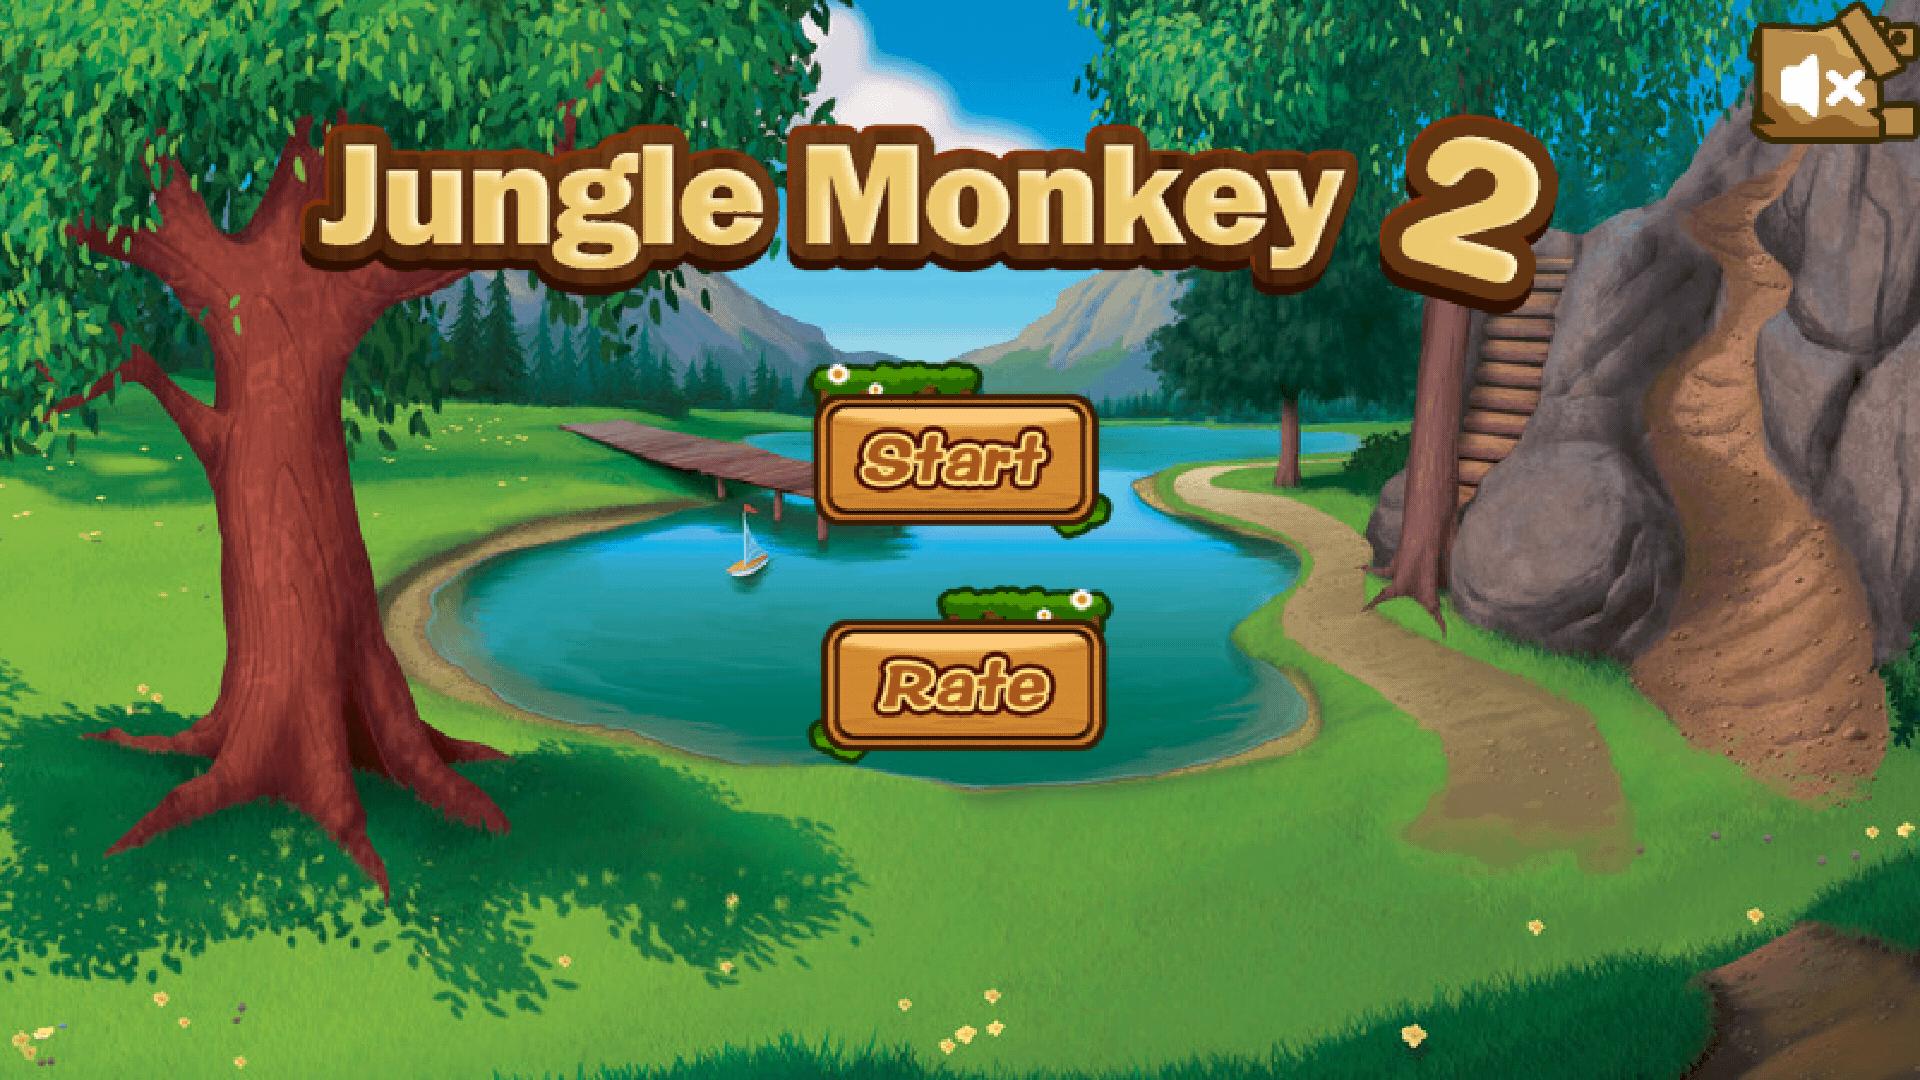 Jungle monkeys. Jungle обезьяна игры. Игра про двух обезьян. Игра про обезьян и шарики. ВР игра про обезьян.